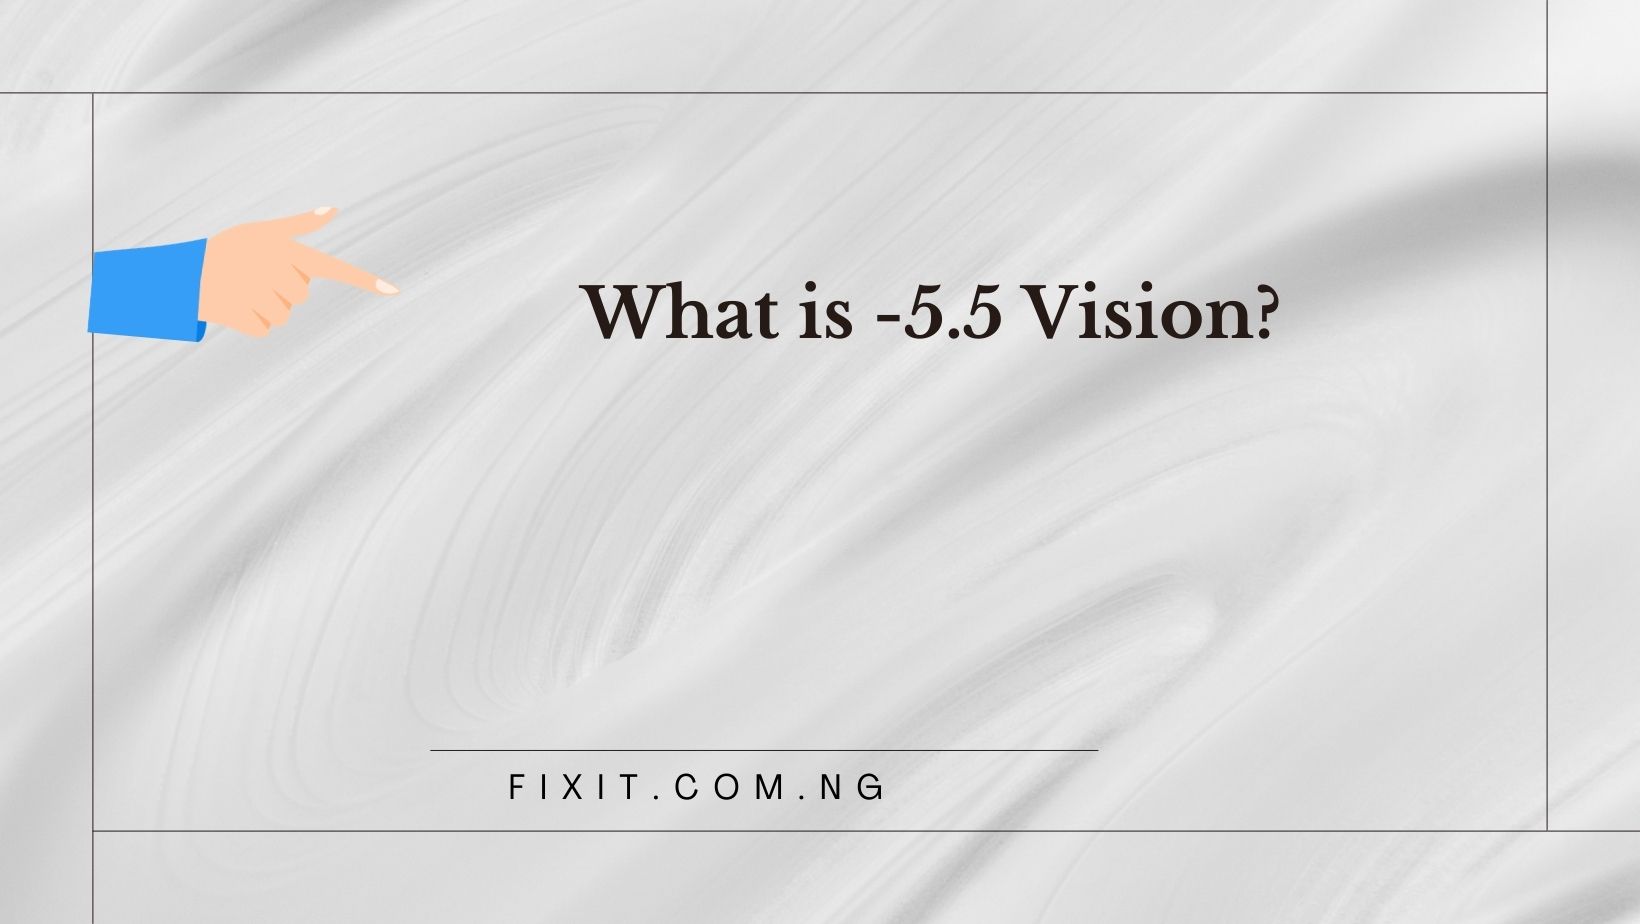 -5.5 vision